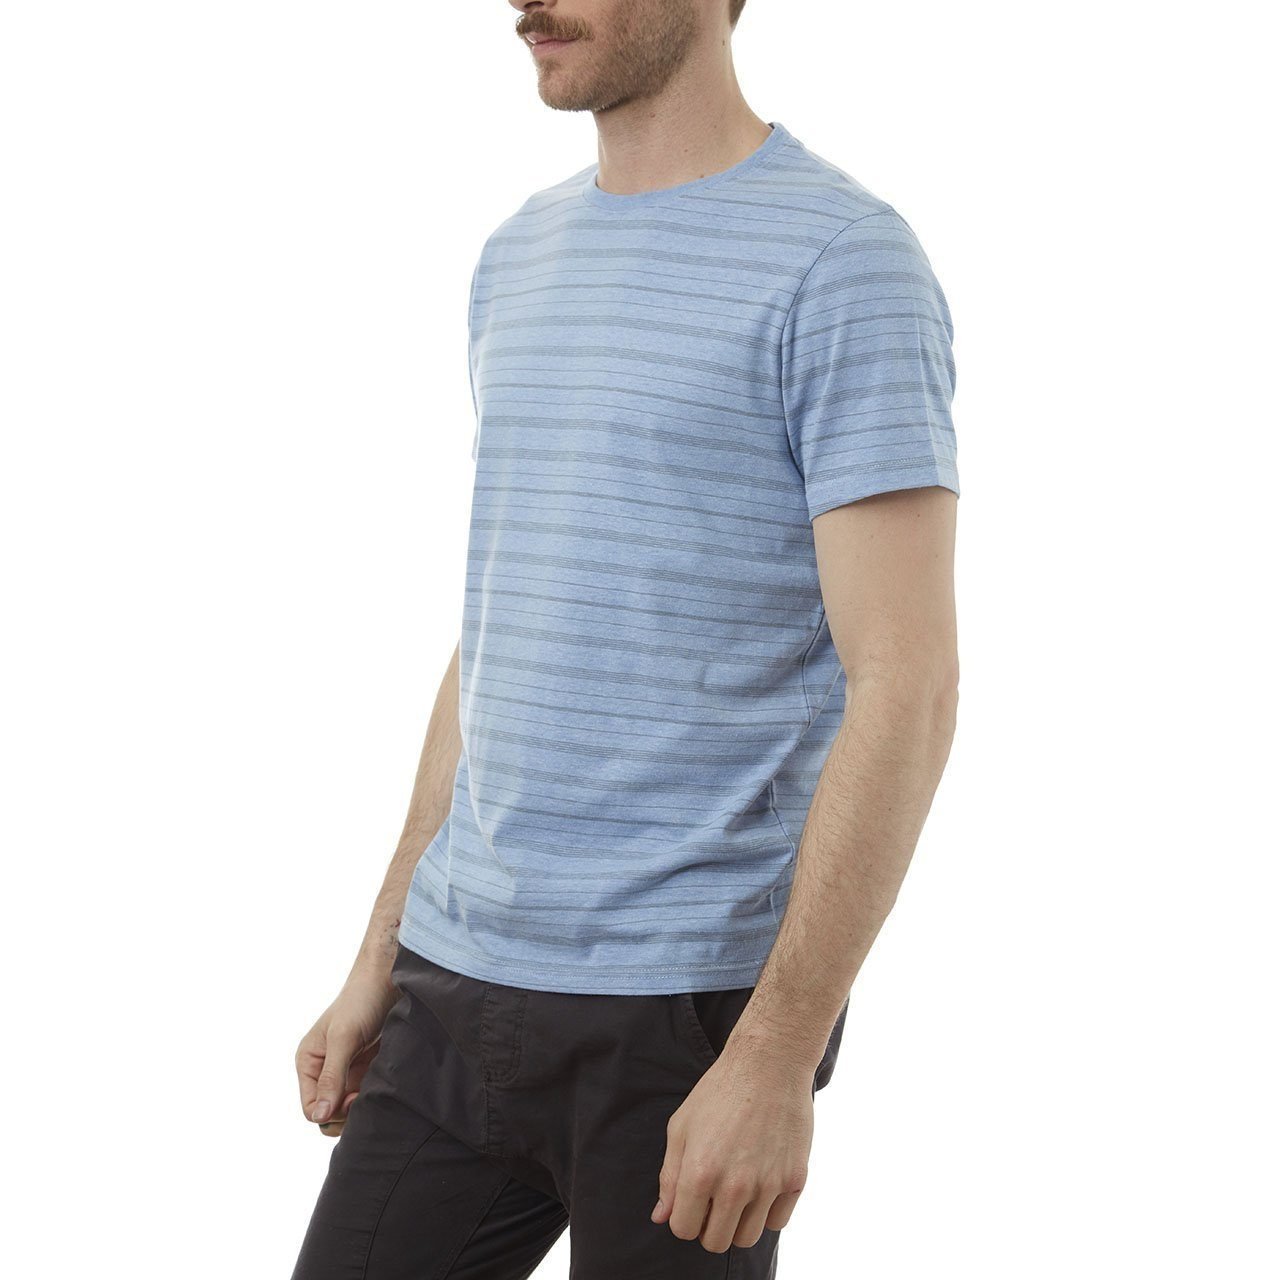 PX Clothing Men's Oscar Striped Tee in Blue - Men - Apparel - Shirts - T-Shirts - Benn~Burry